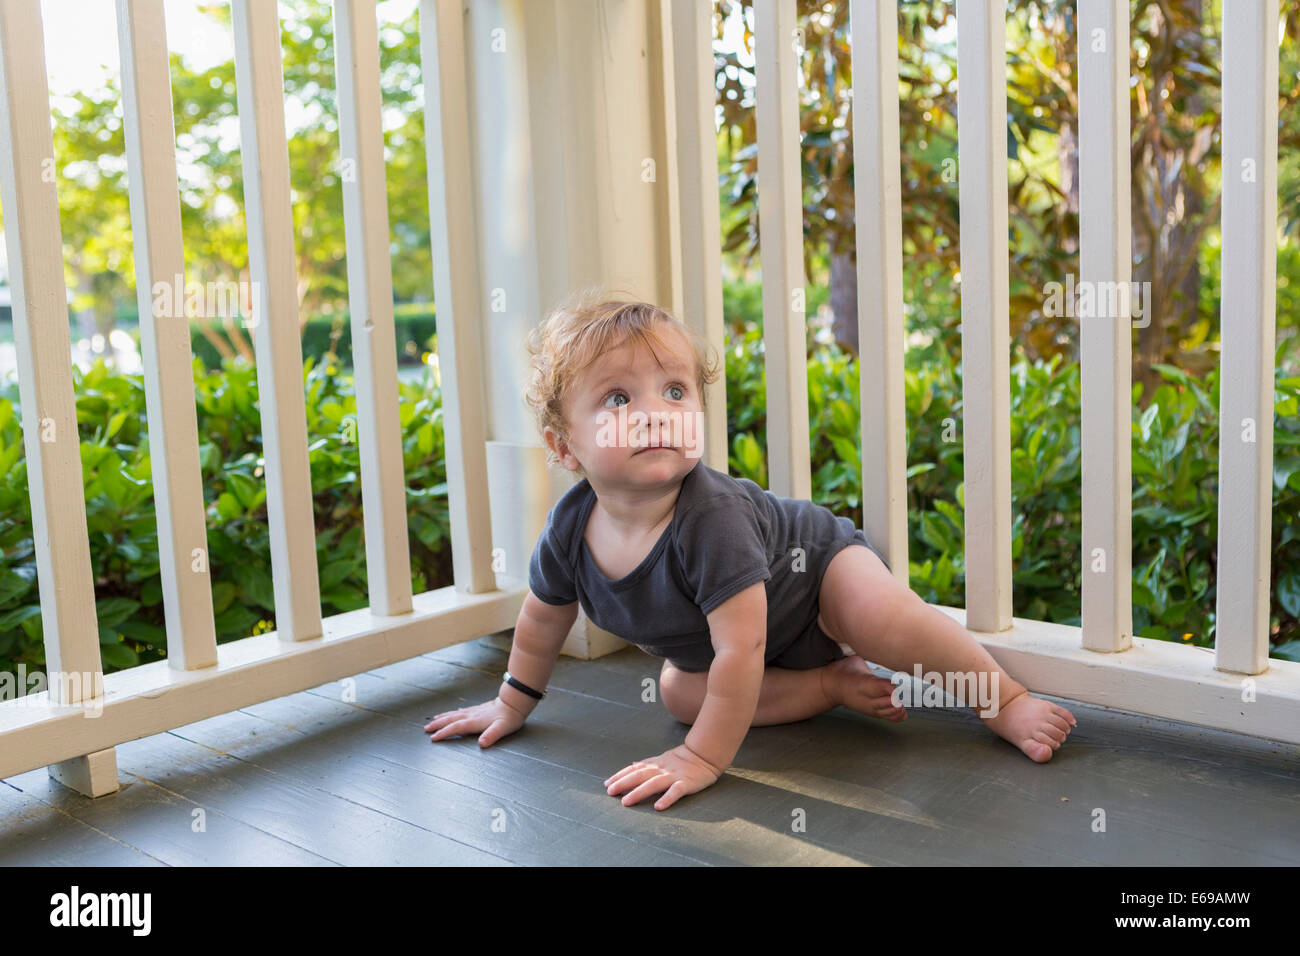 Kaukasische Baby krabbeln auf Veranda Stockfoto